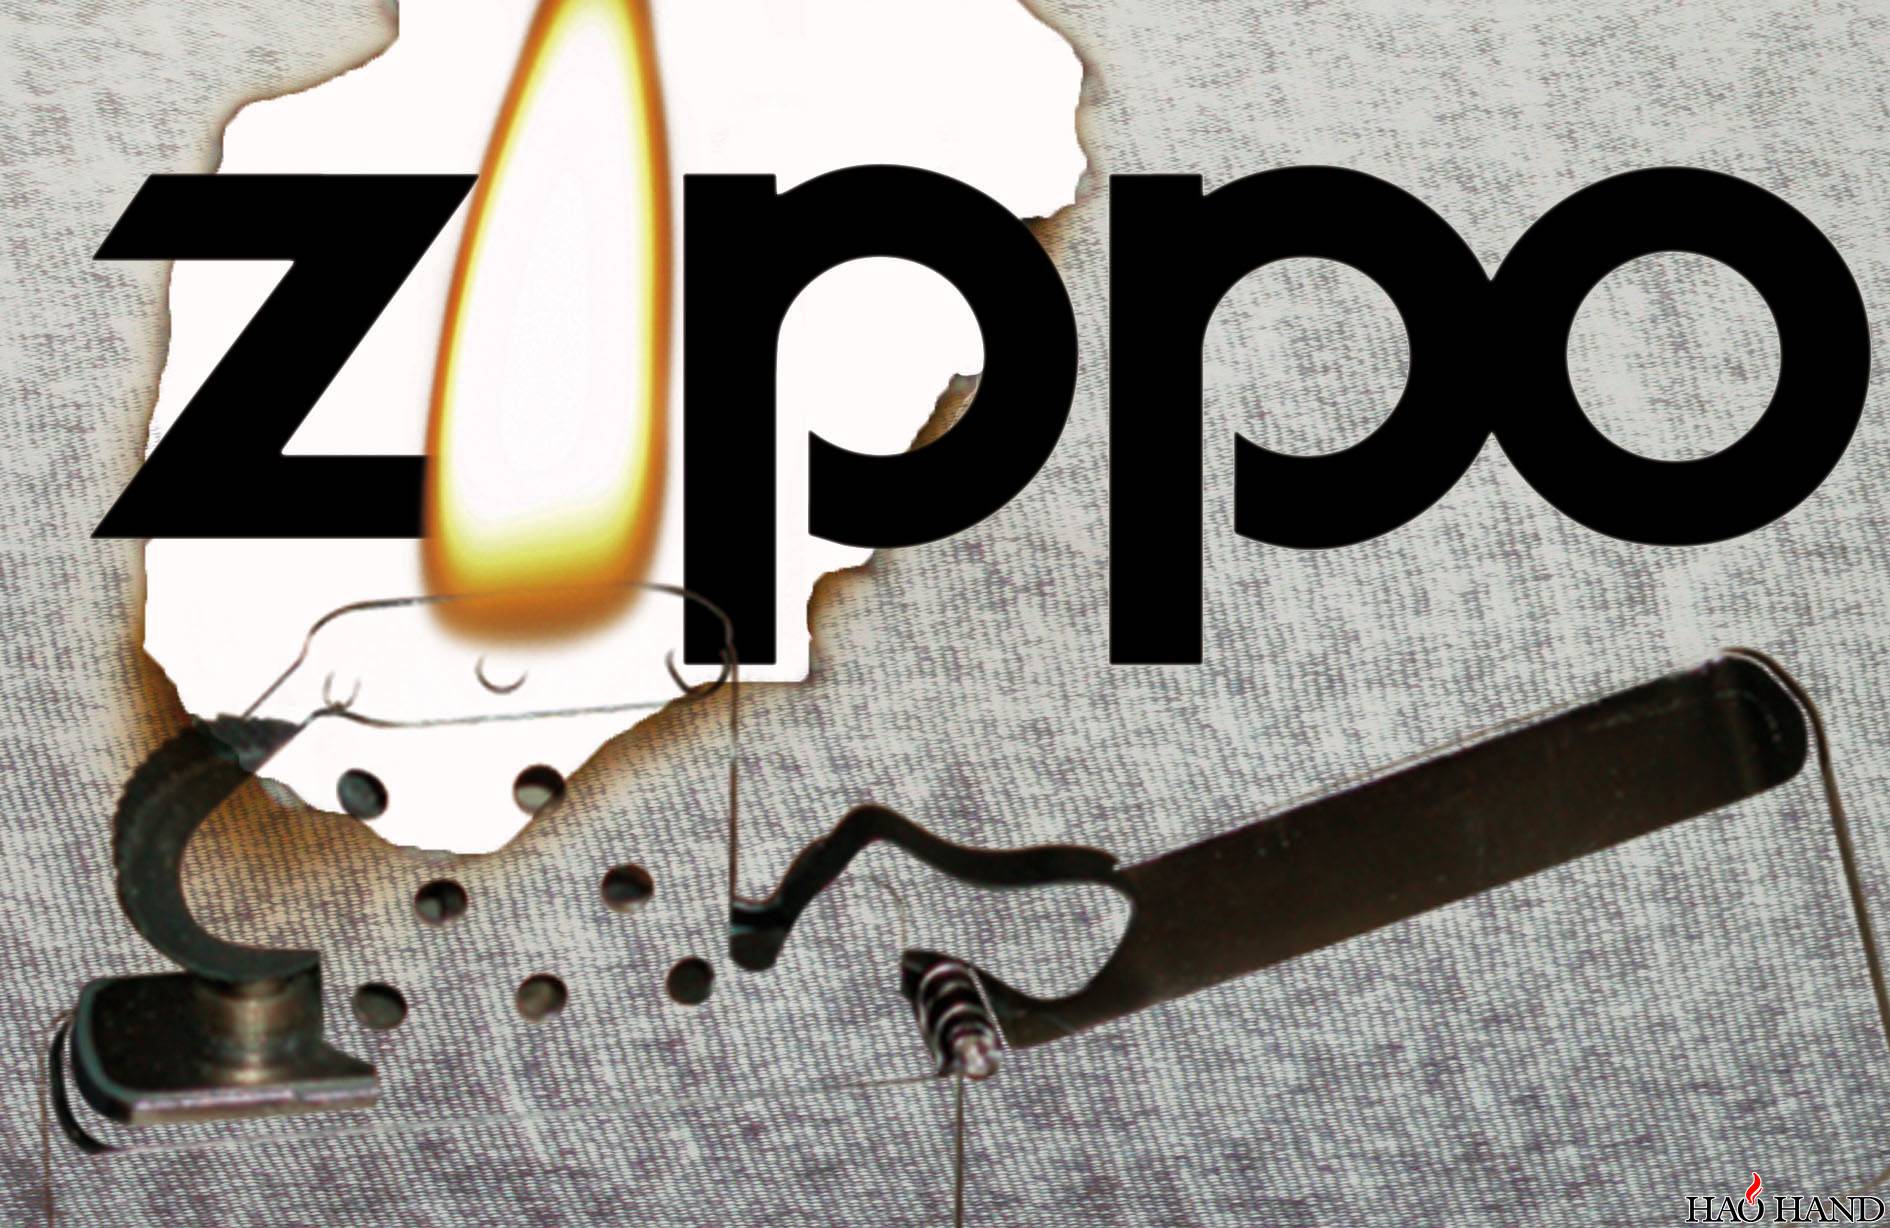 zippo_2_by_ars_dpi_d32cce8.jpg